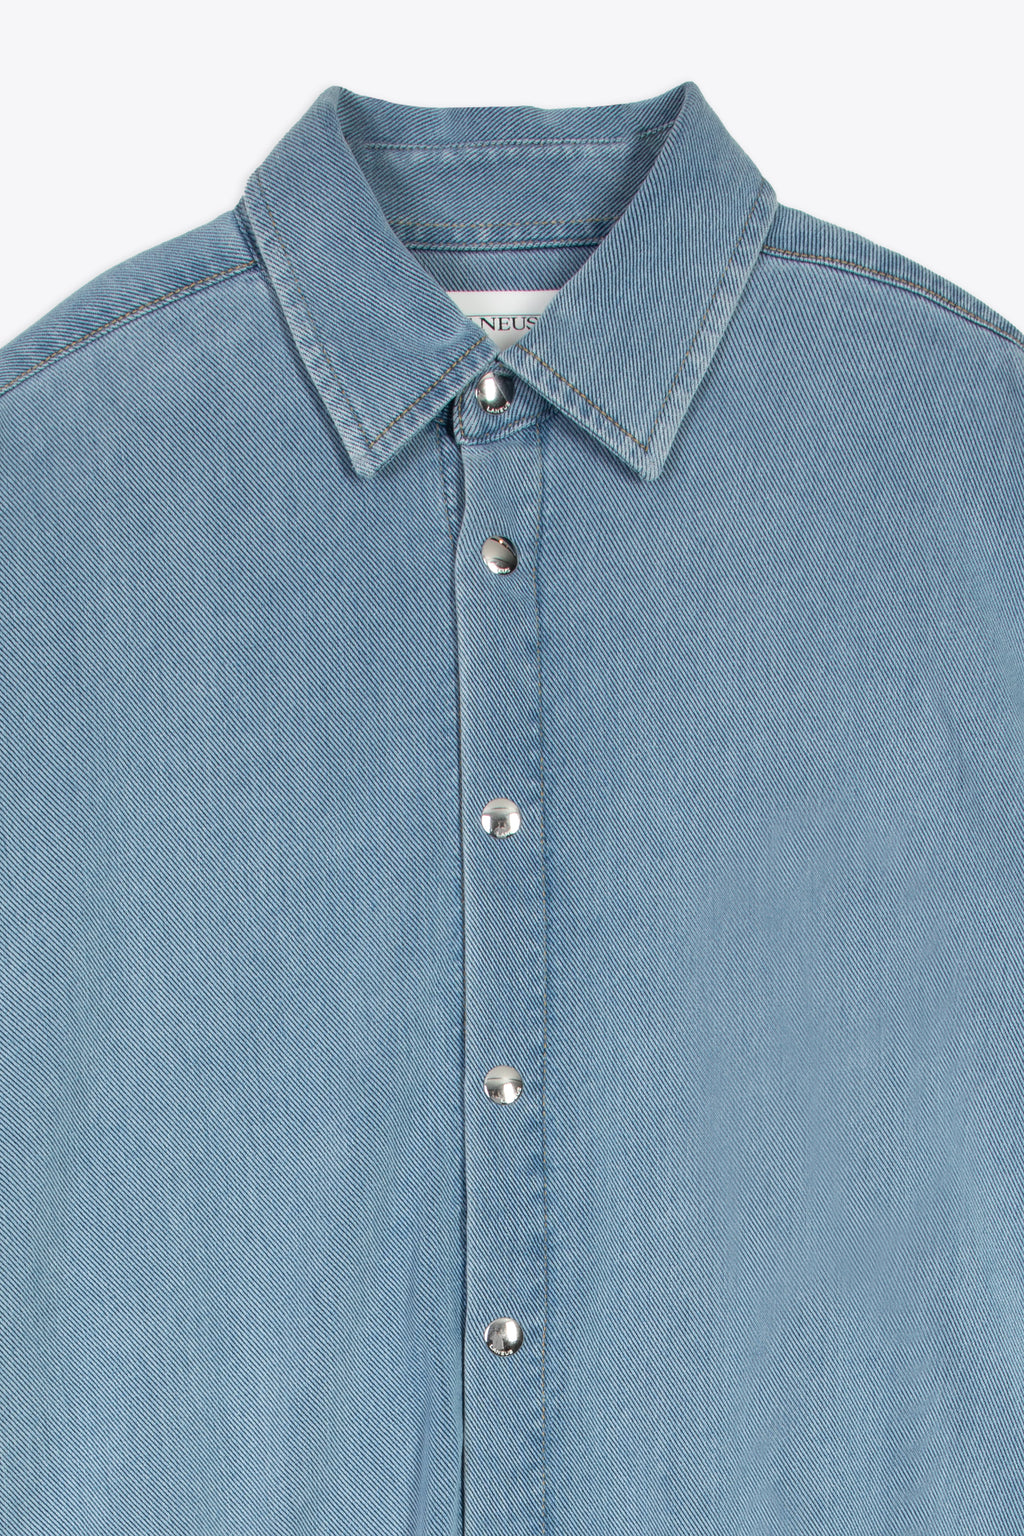 alt-image__Light-blue-chambray-denim-oversize-shirt---Denim-Shirt